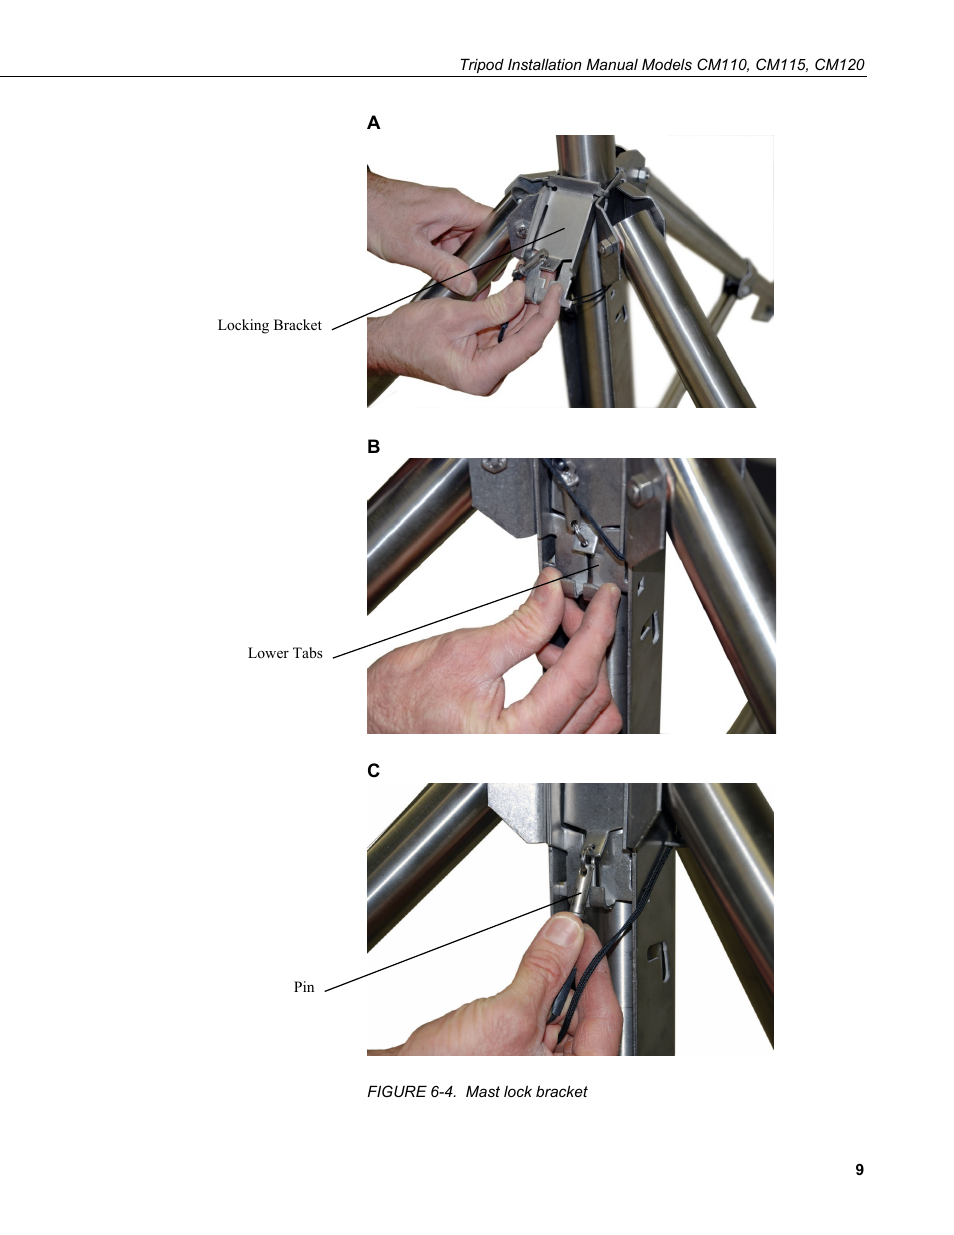 4. mast lock bracket | Campbell Scientific CM110, CM115, CM120 Tripod Installation User Manual | Page 17 / 40